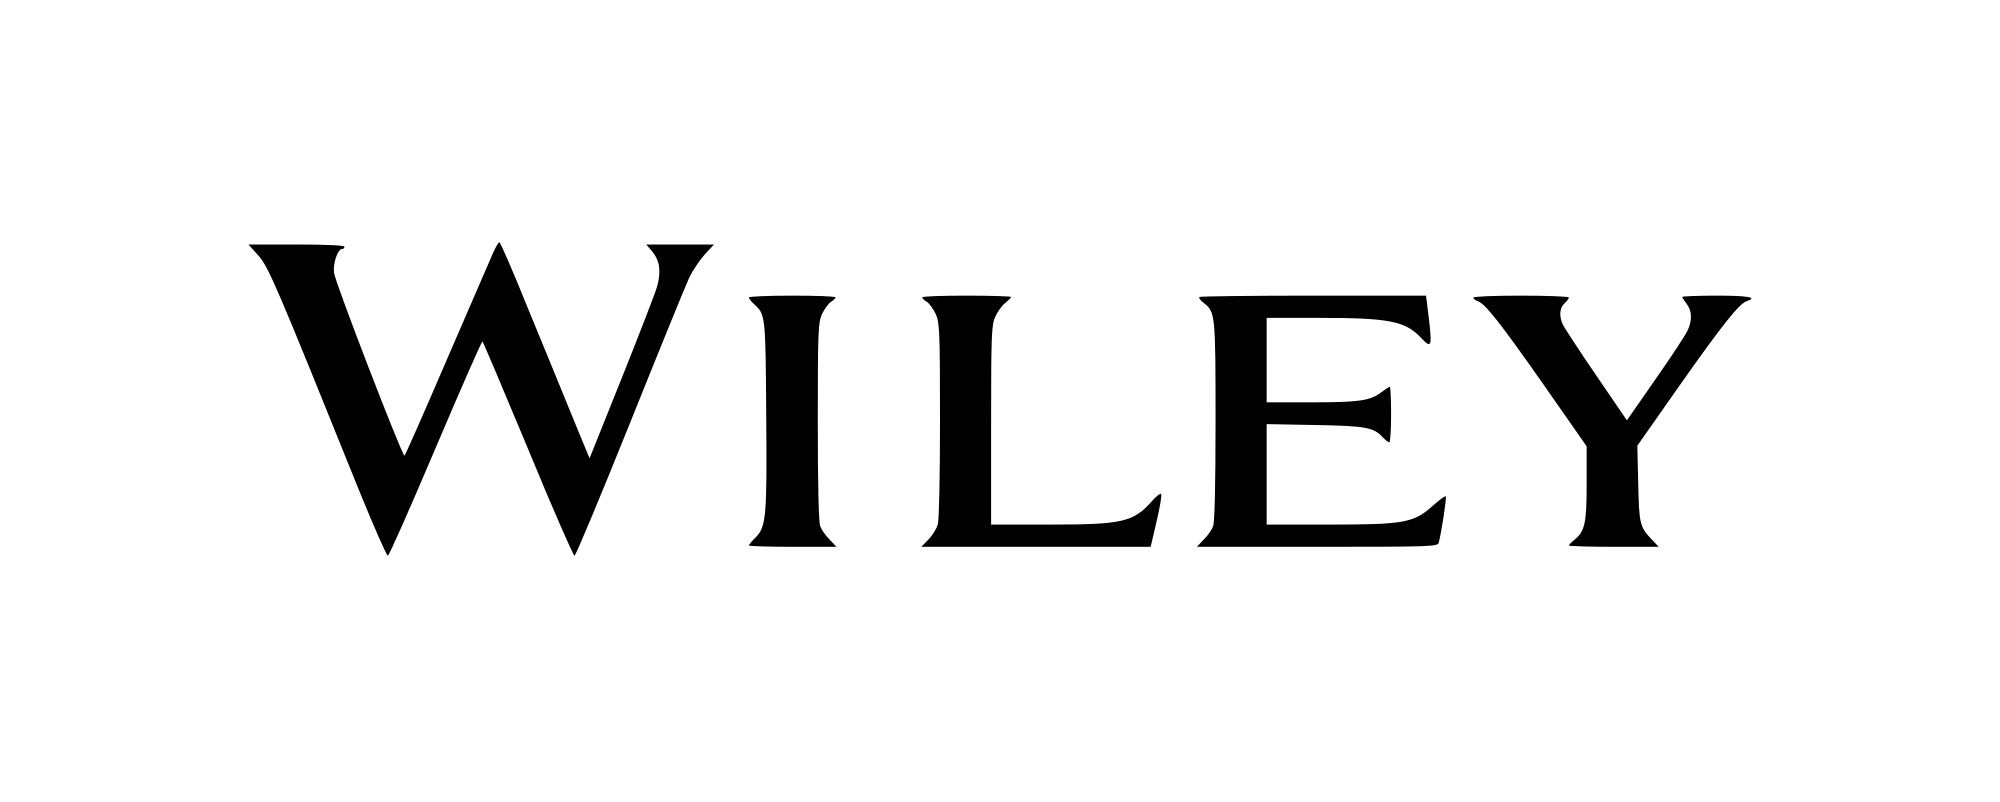 NetSim logo